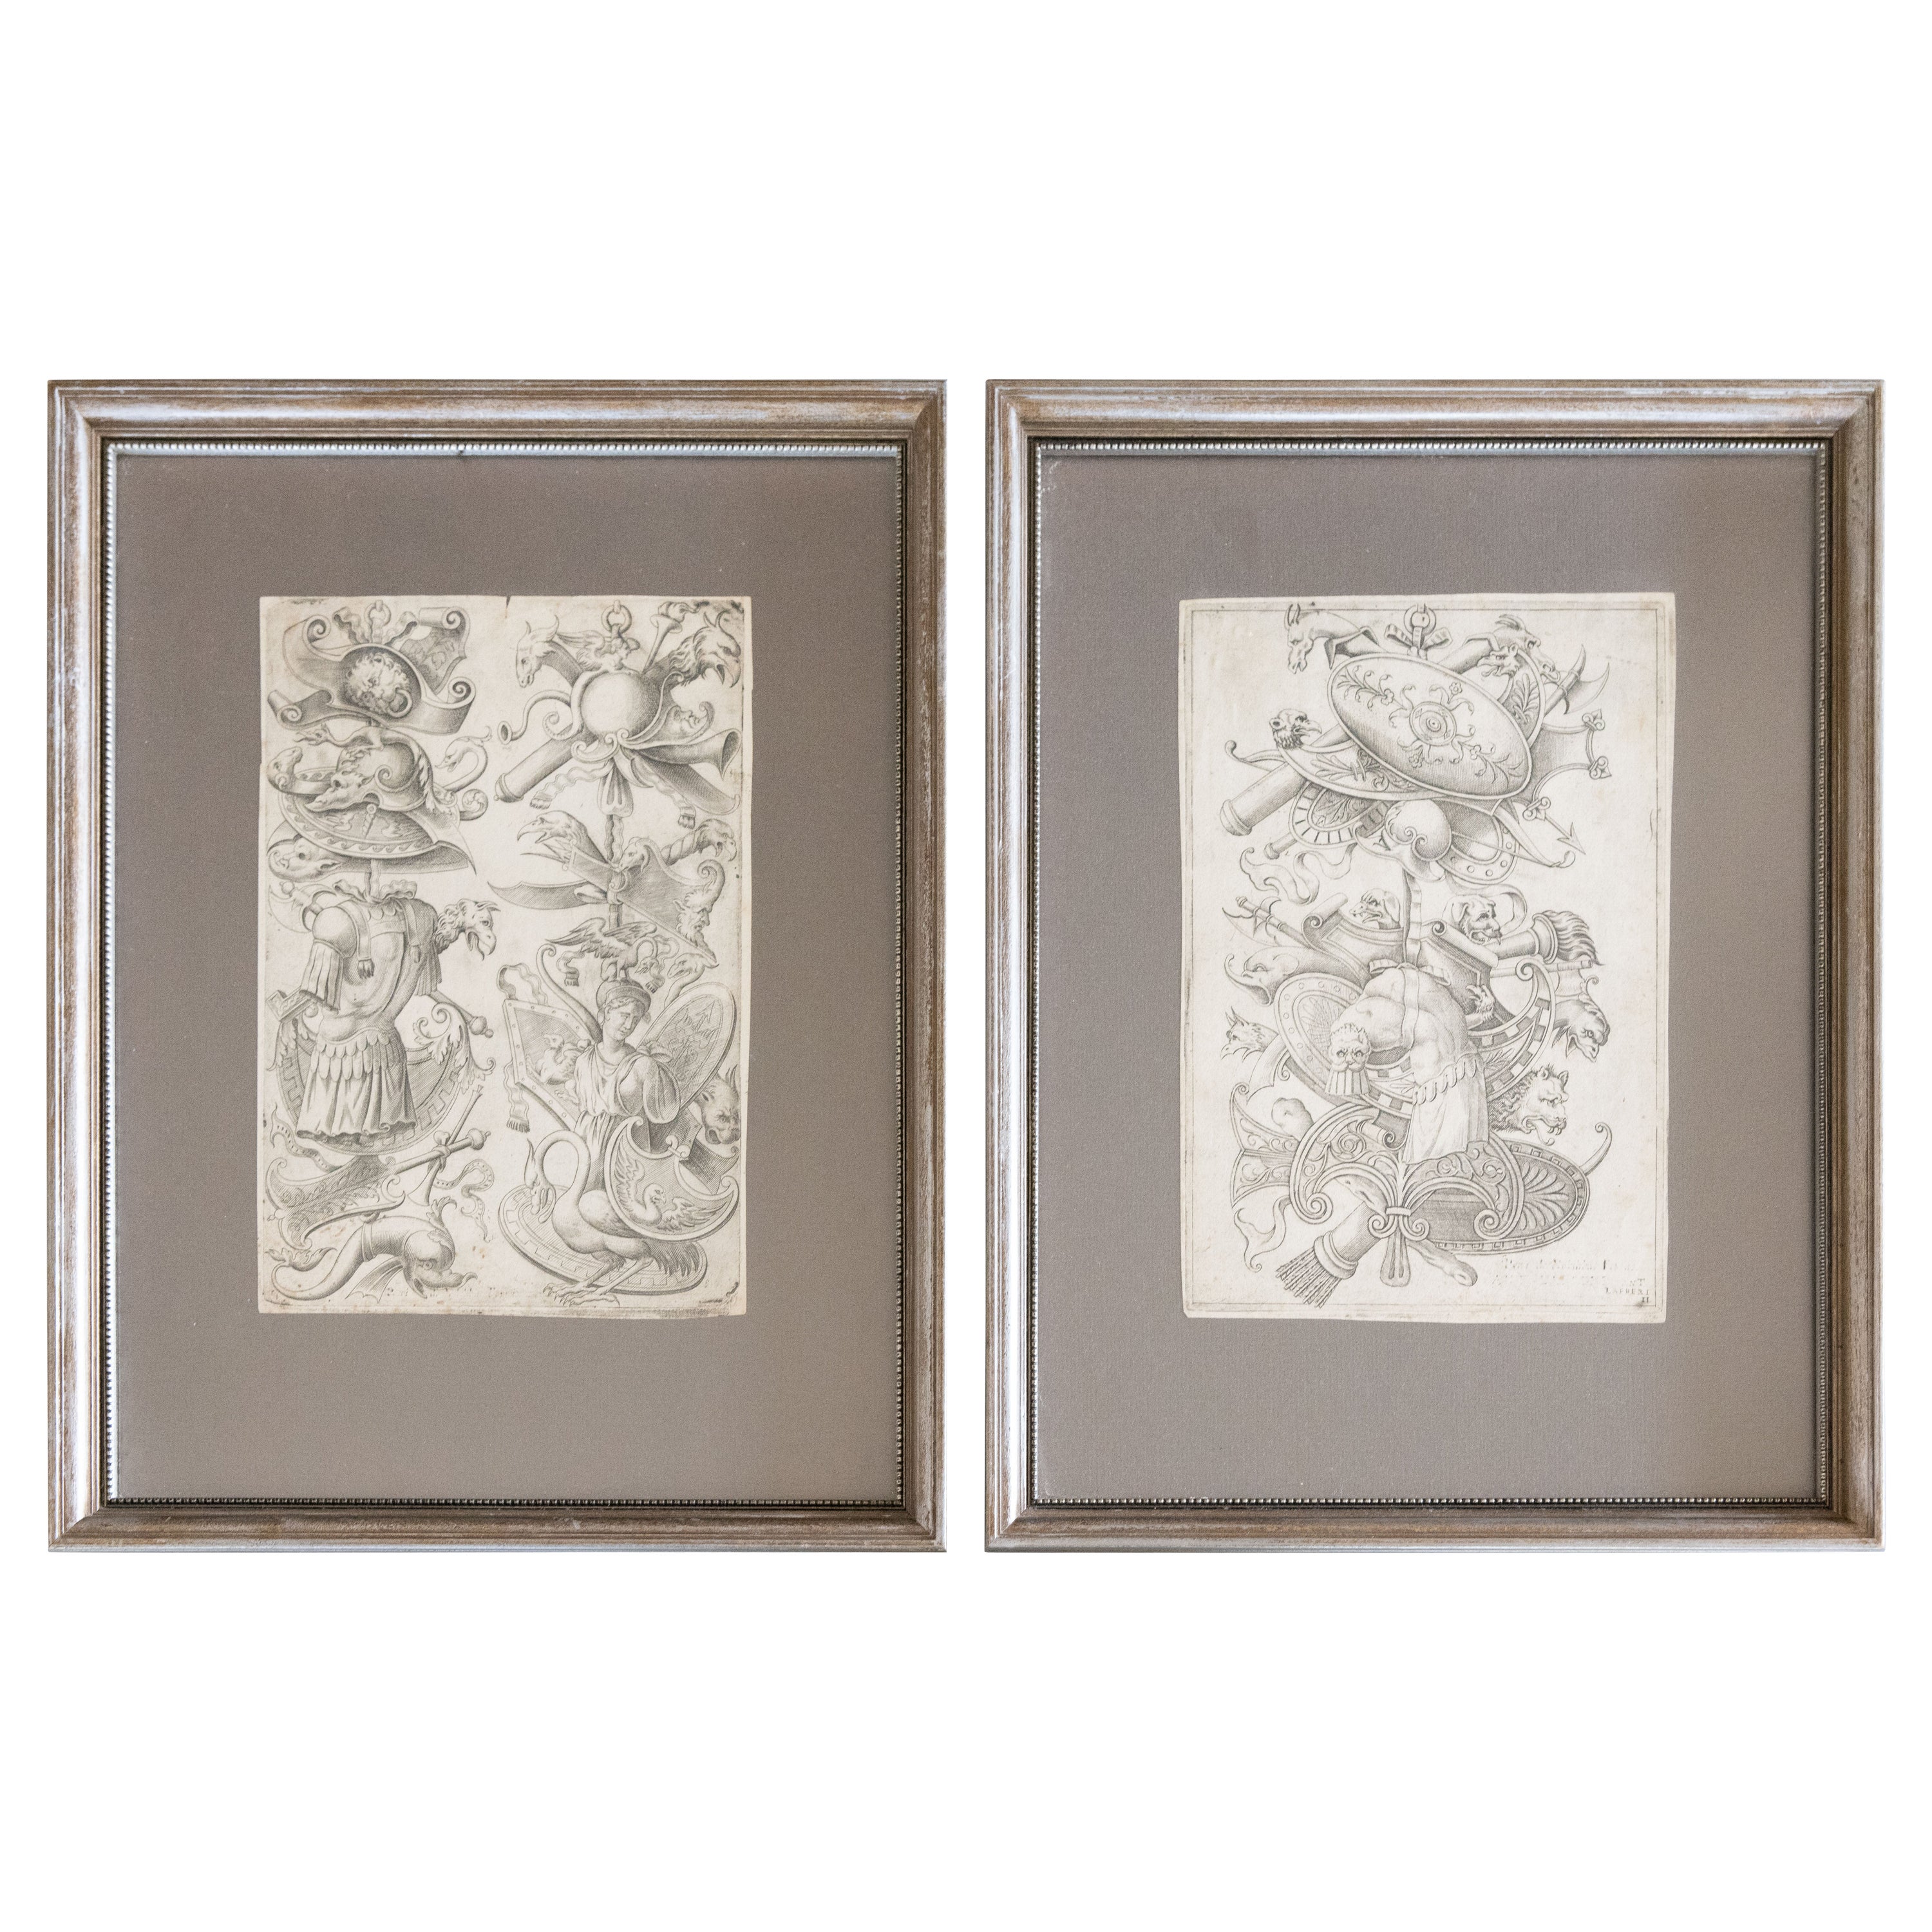 Set of 2 Framed Antique Italian Neoclassical 1553 Engravings by Antonio Lafreri